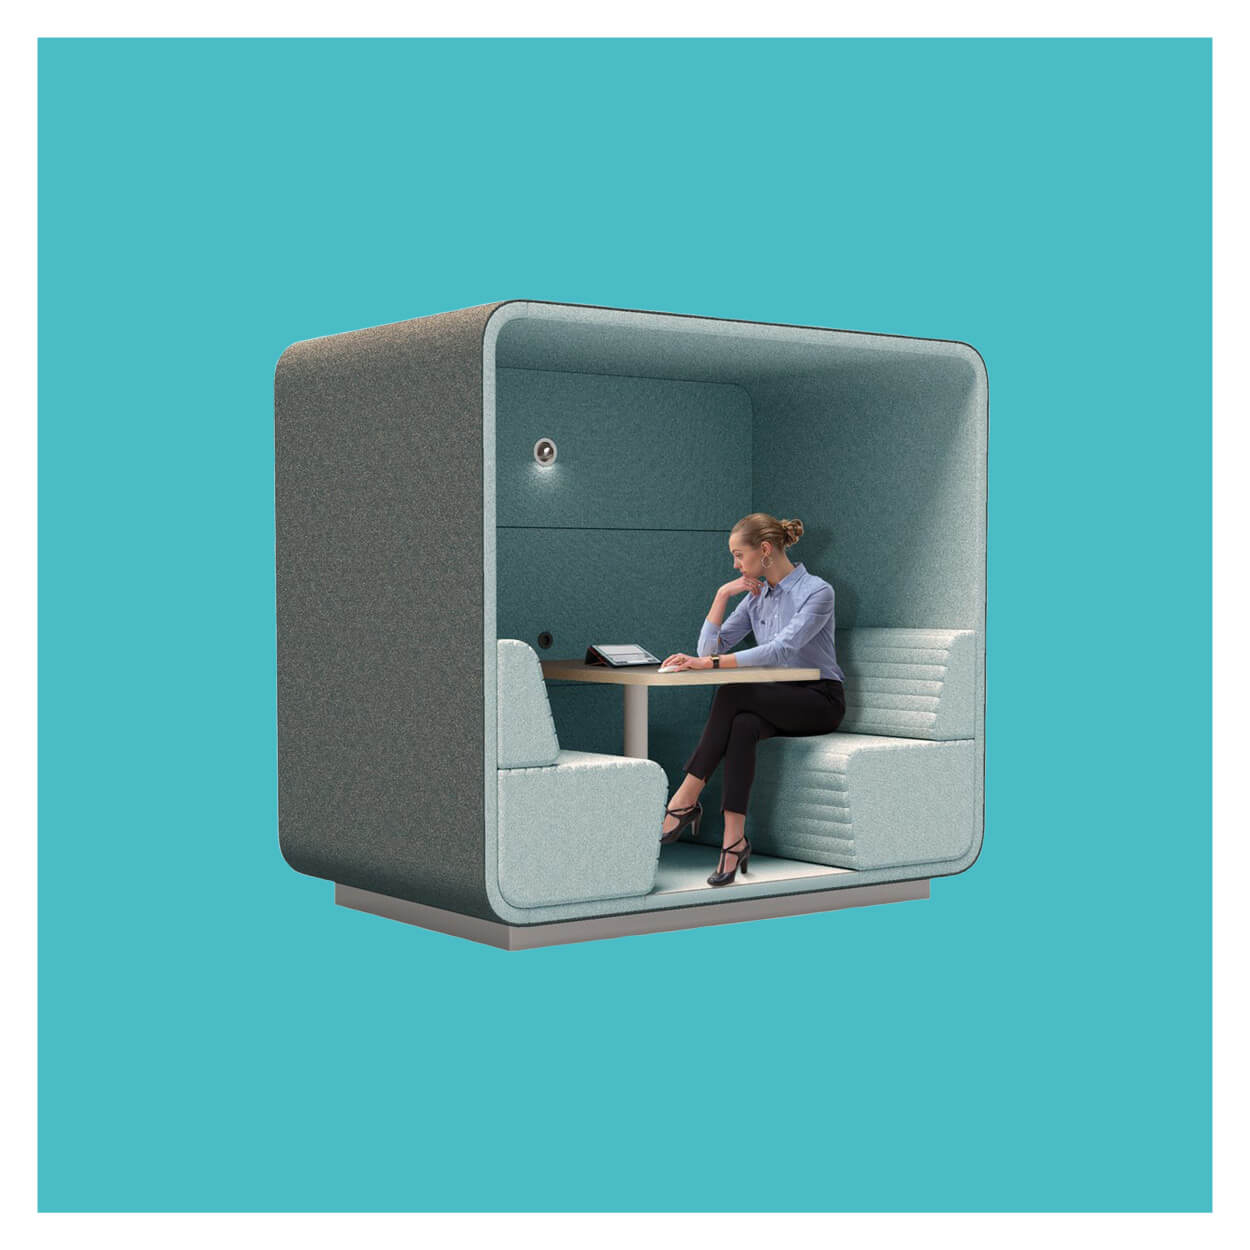 Cabin booth conceptual furniture